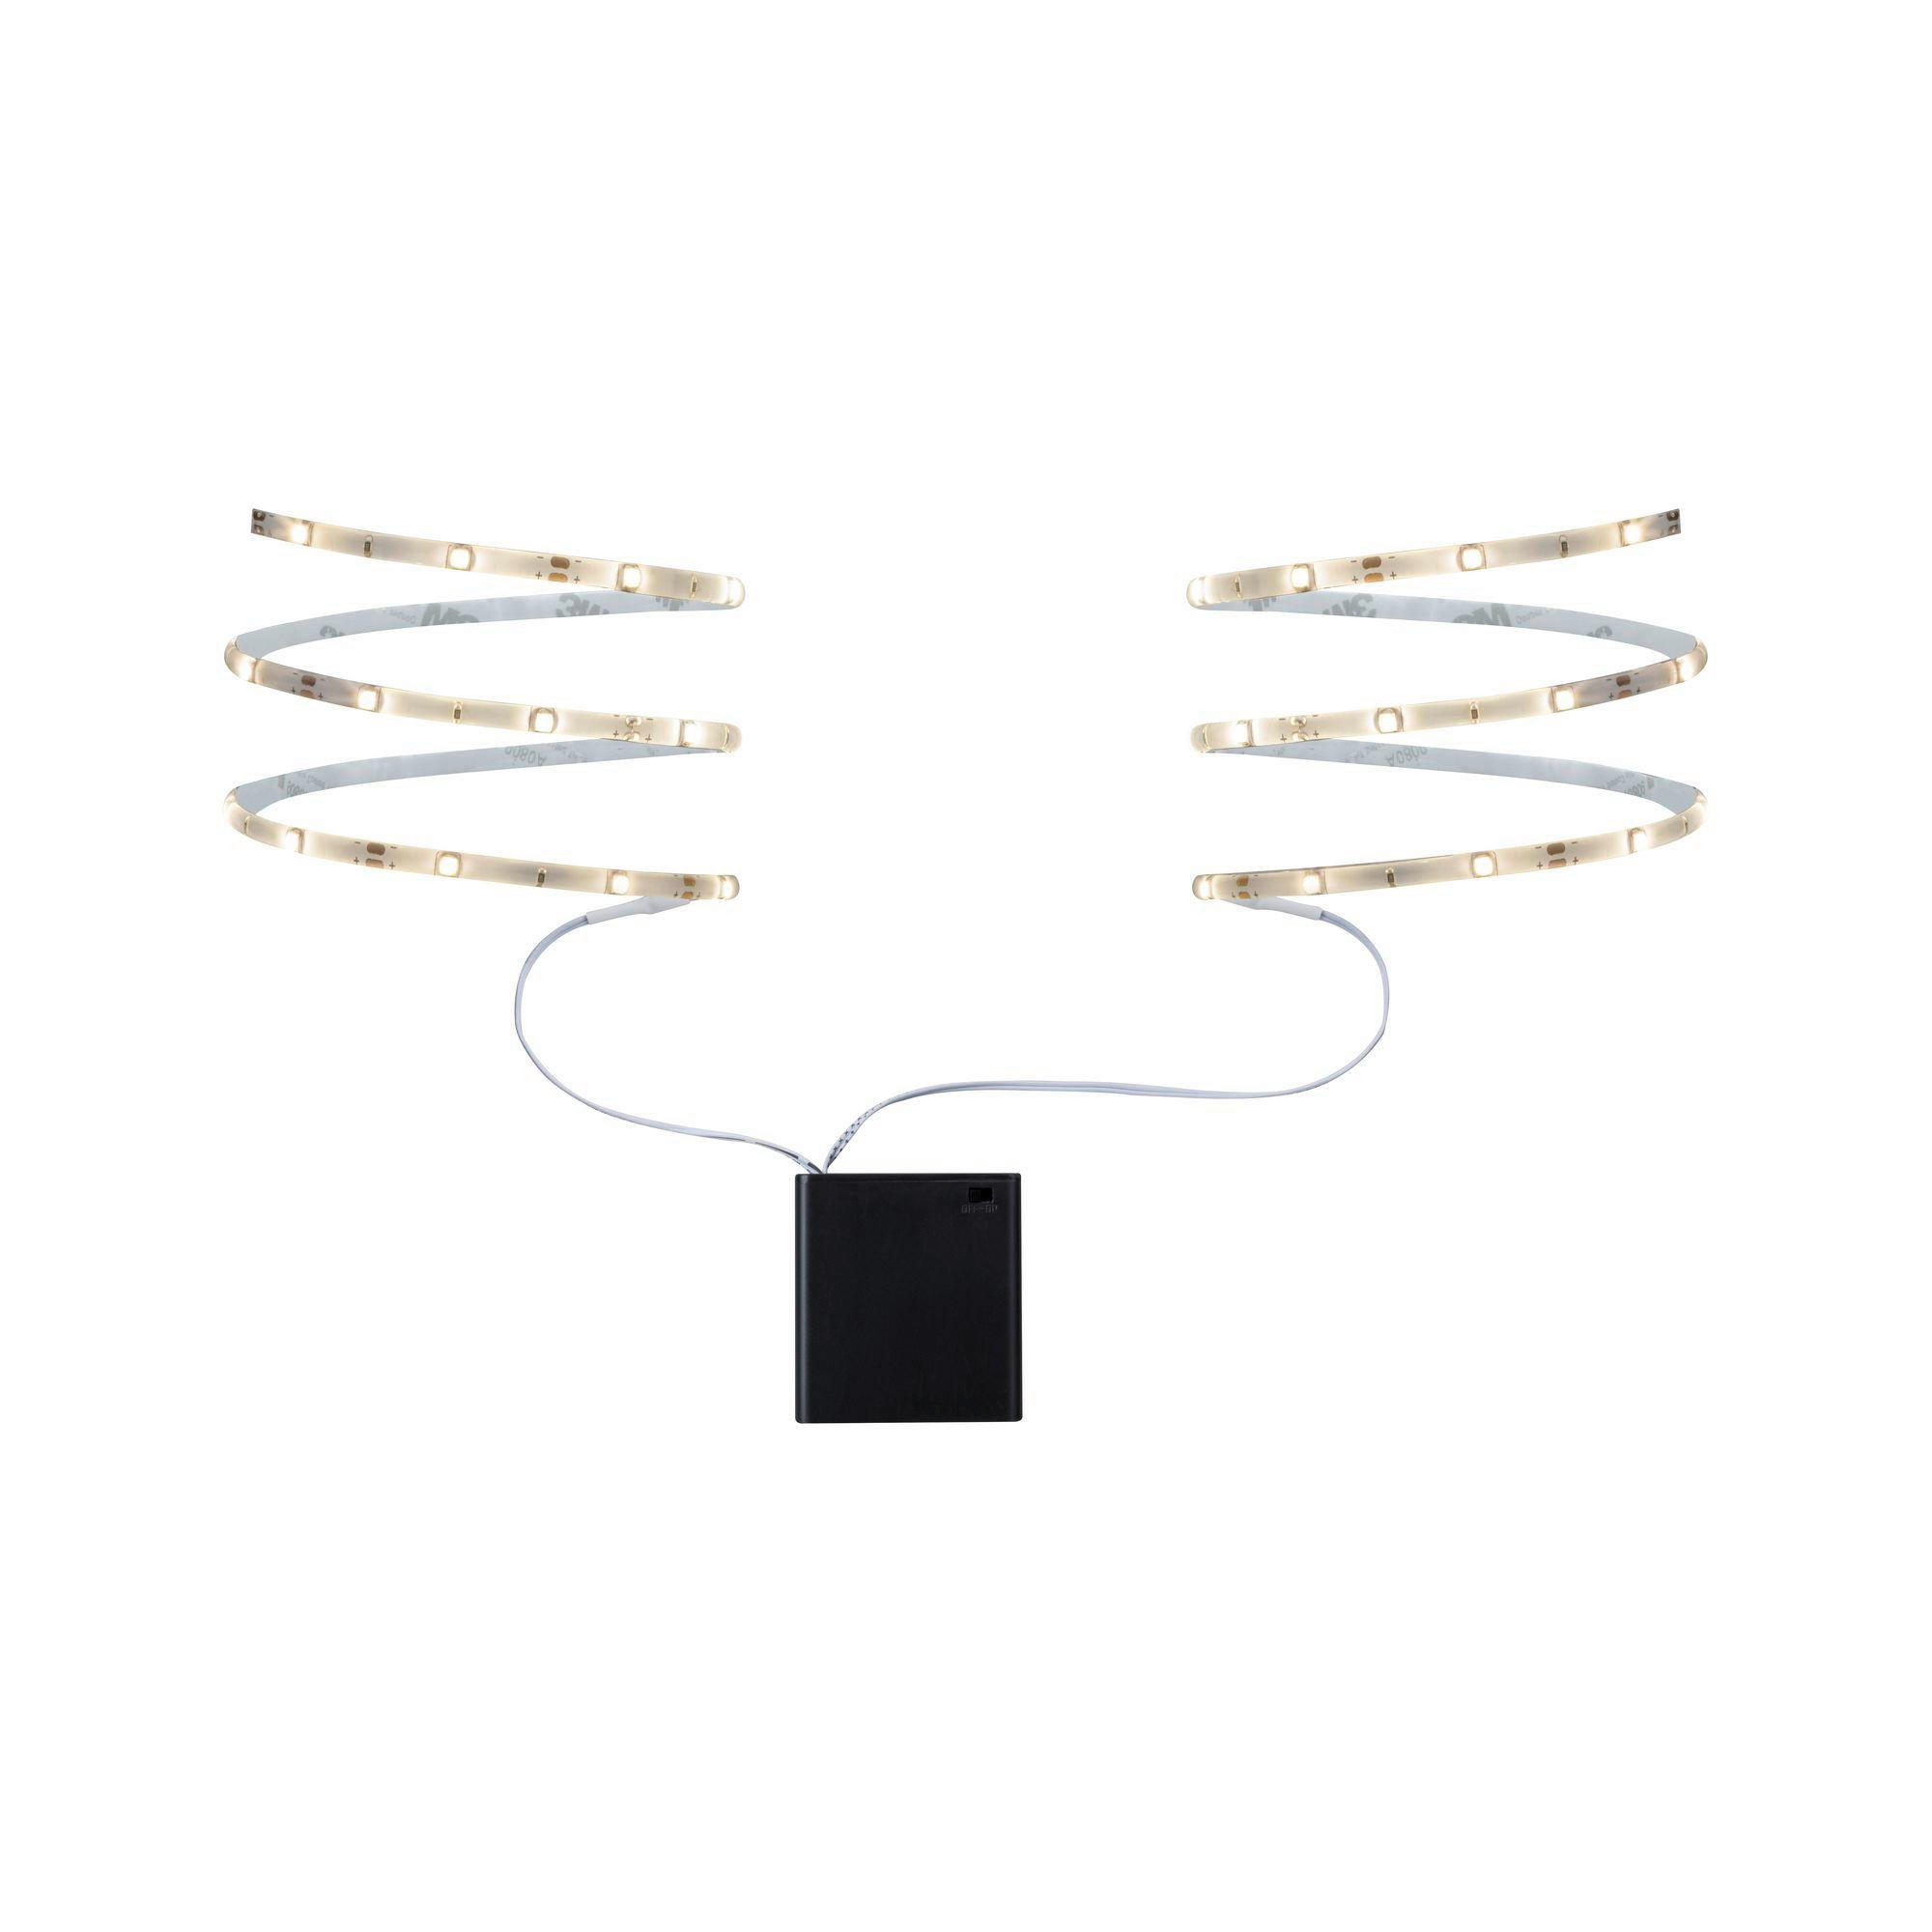 LED-STRIP 2x 80,0 cm  - Weiß, Basics, Kunststoff/Metall (2x 80,0cm) - Paulmann